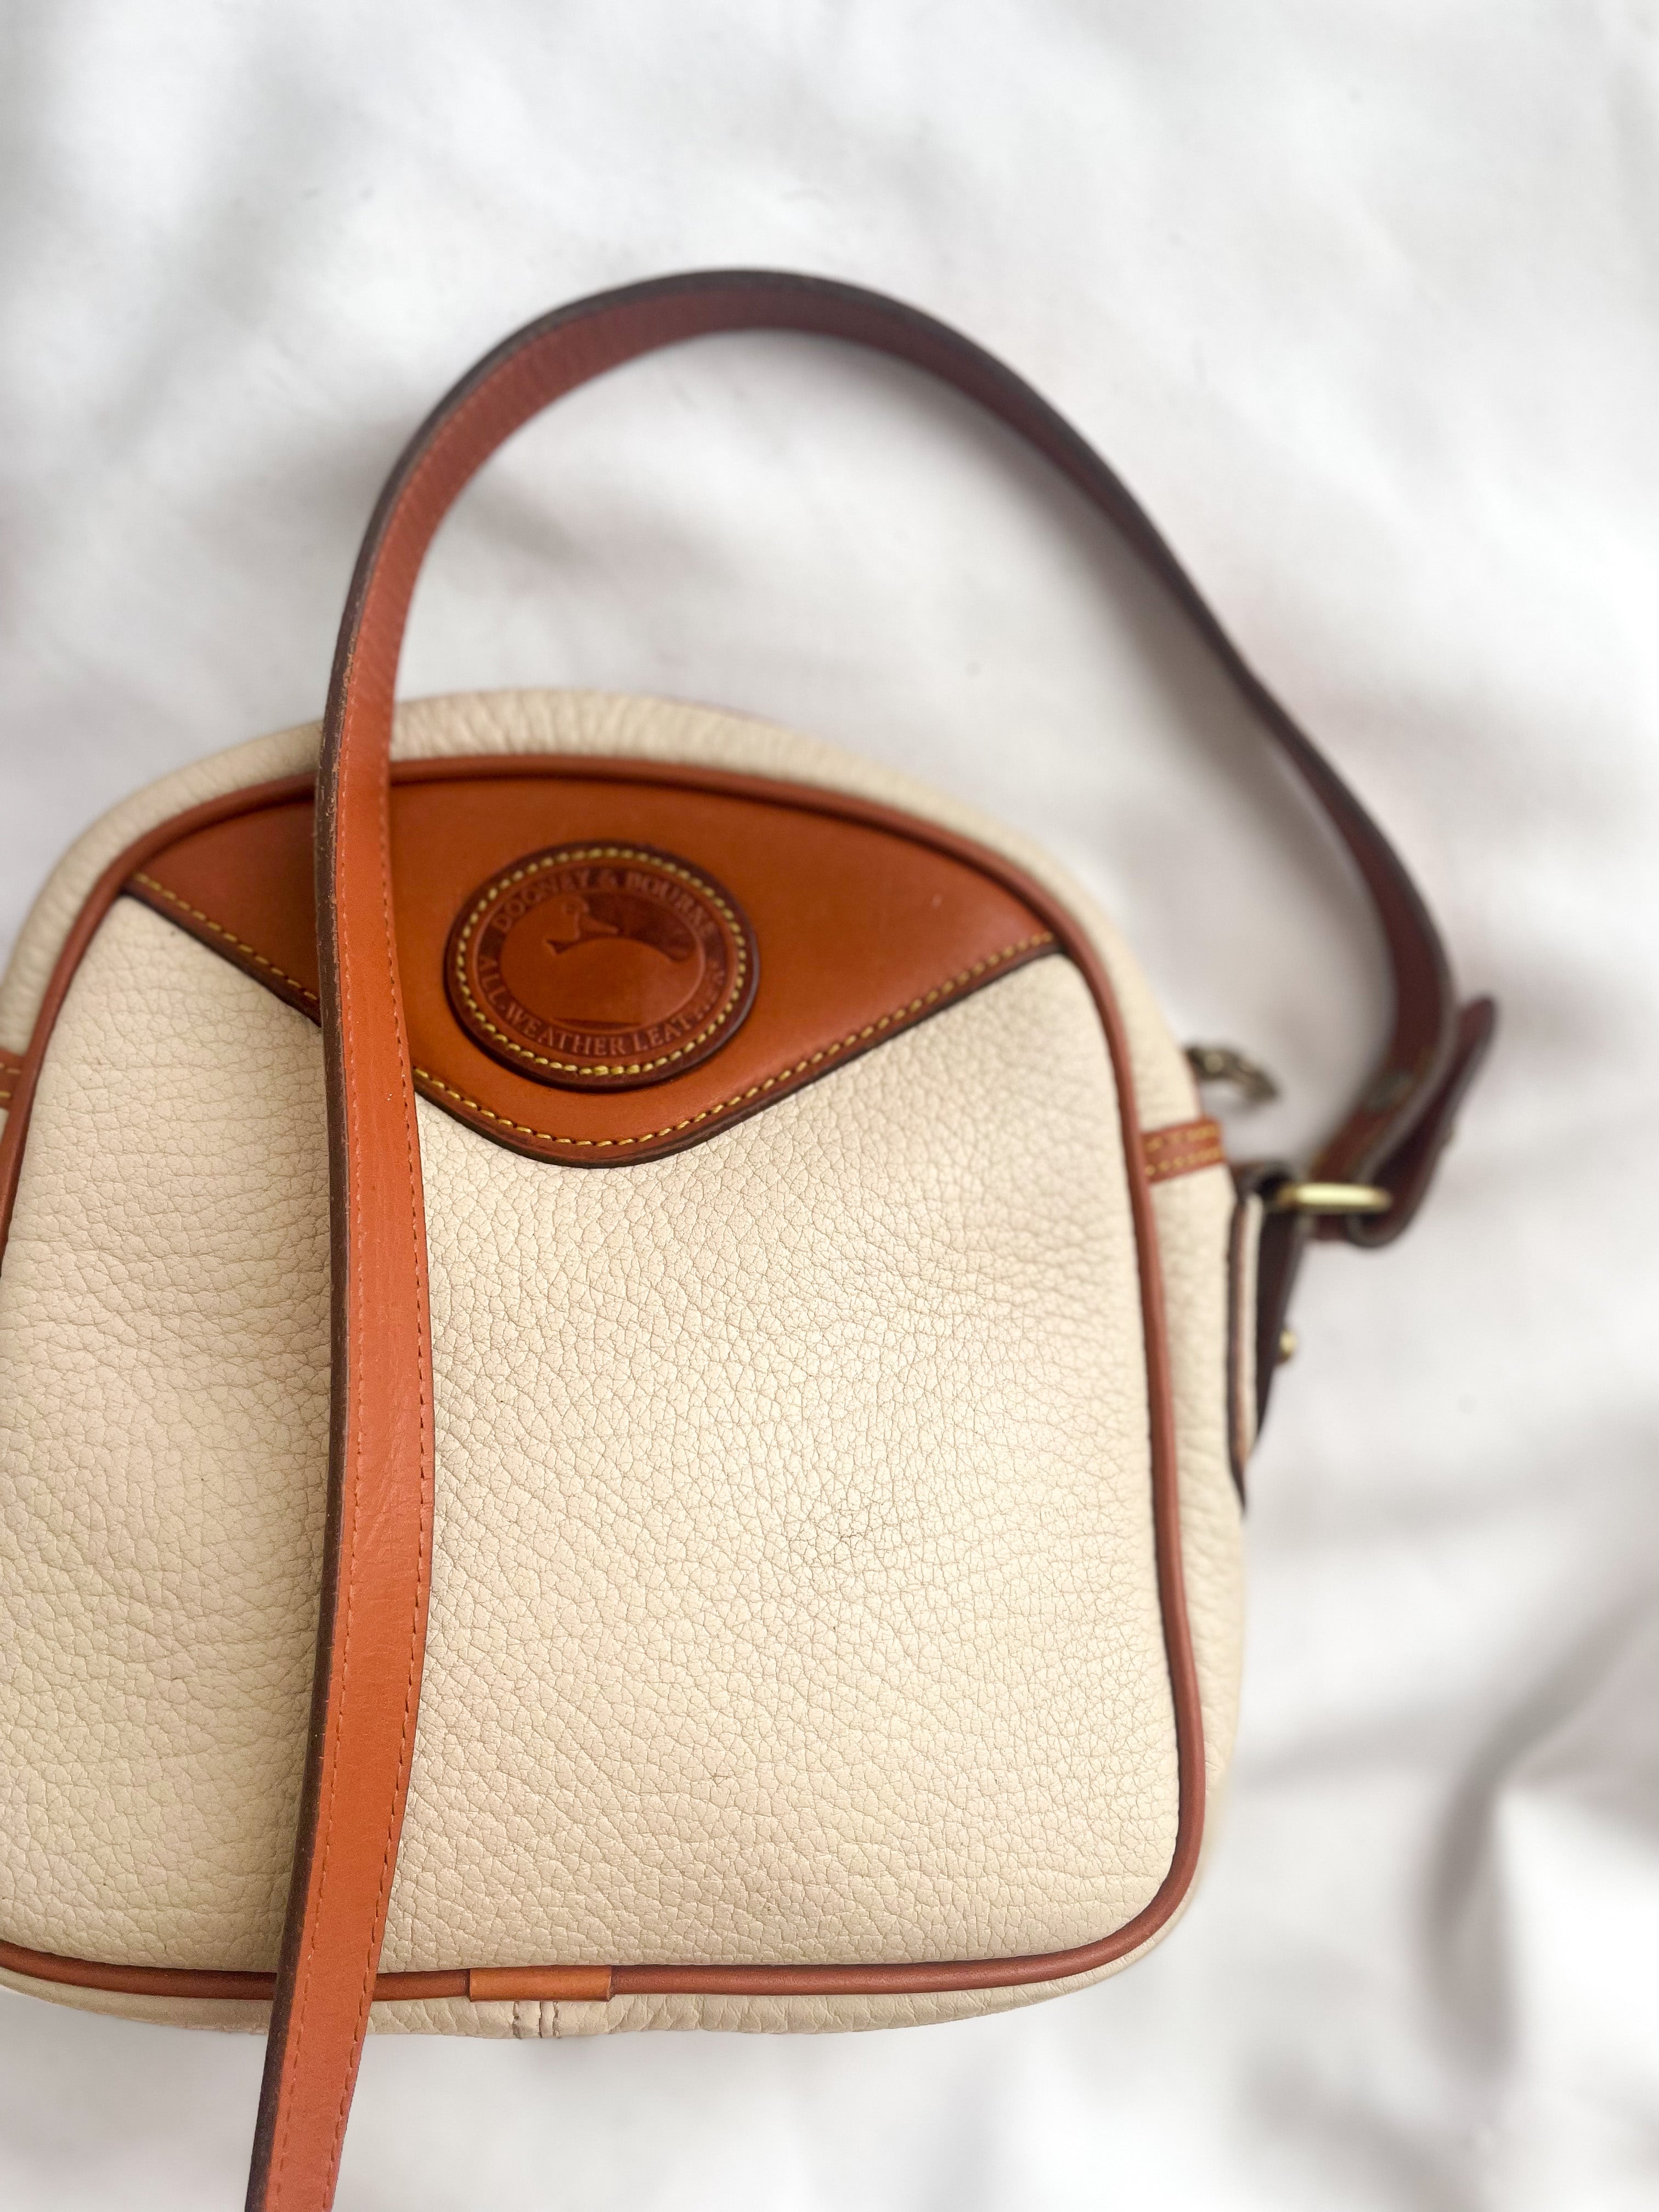 Fine $500 Dooney-Bourke Handbag - clothing & accessories - by owner -  apparel sale - craigslist